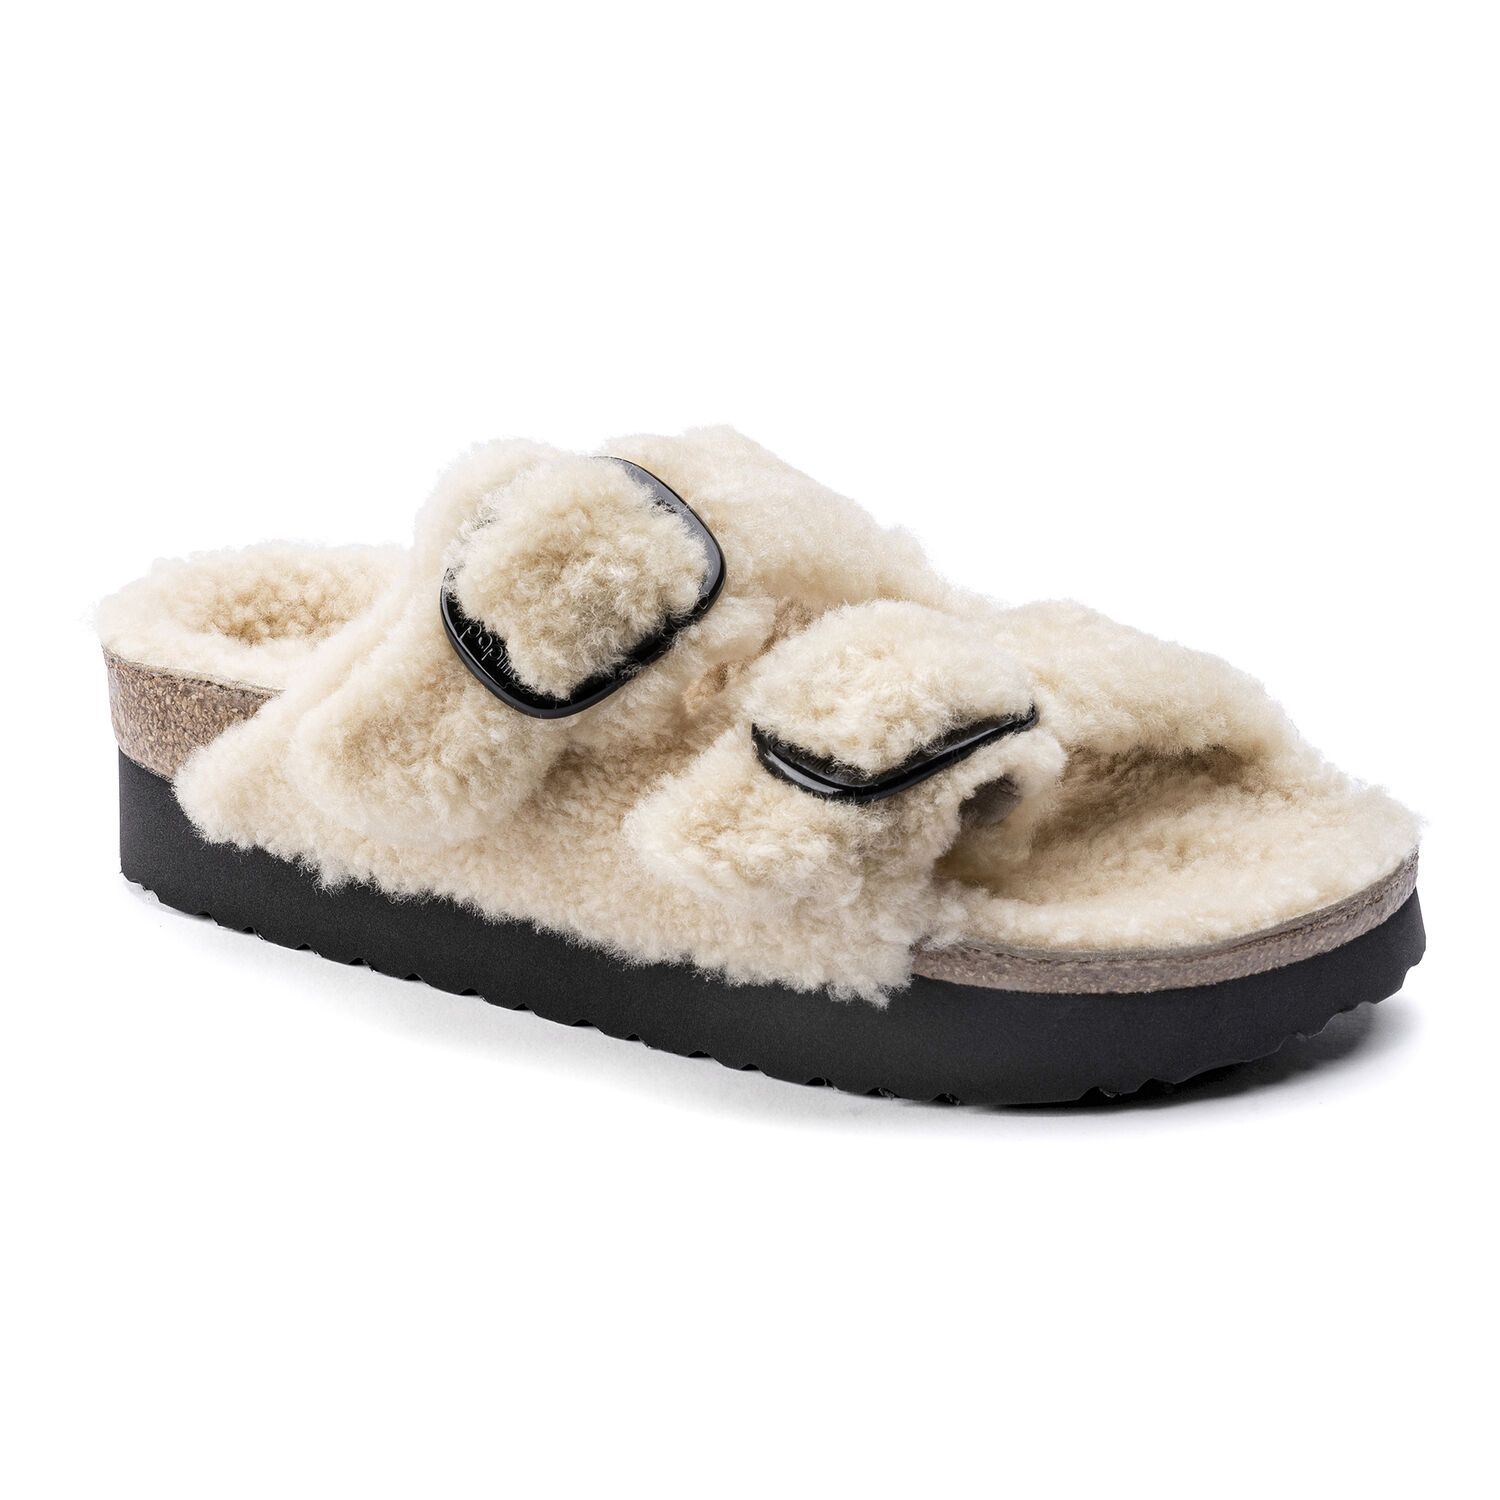 birkenstock style slippers